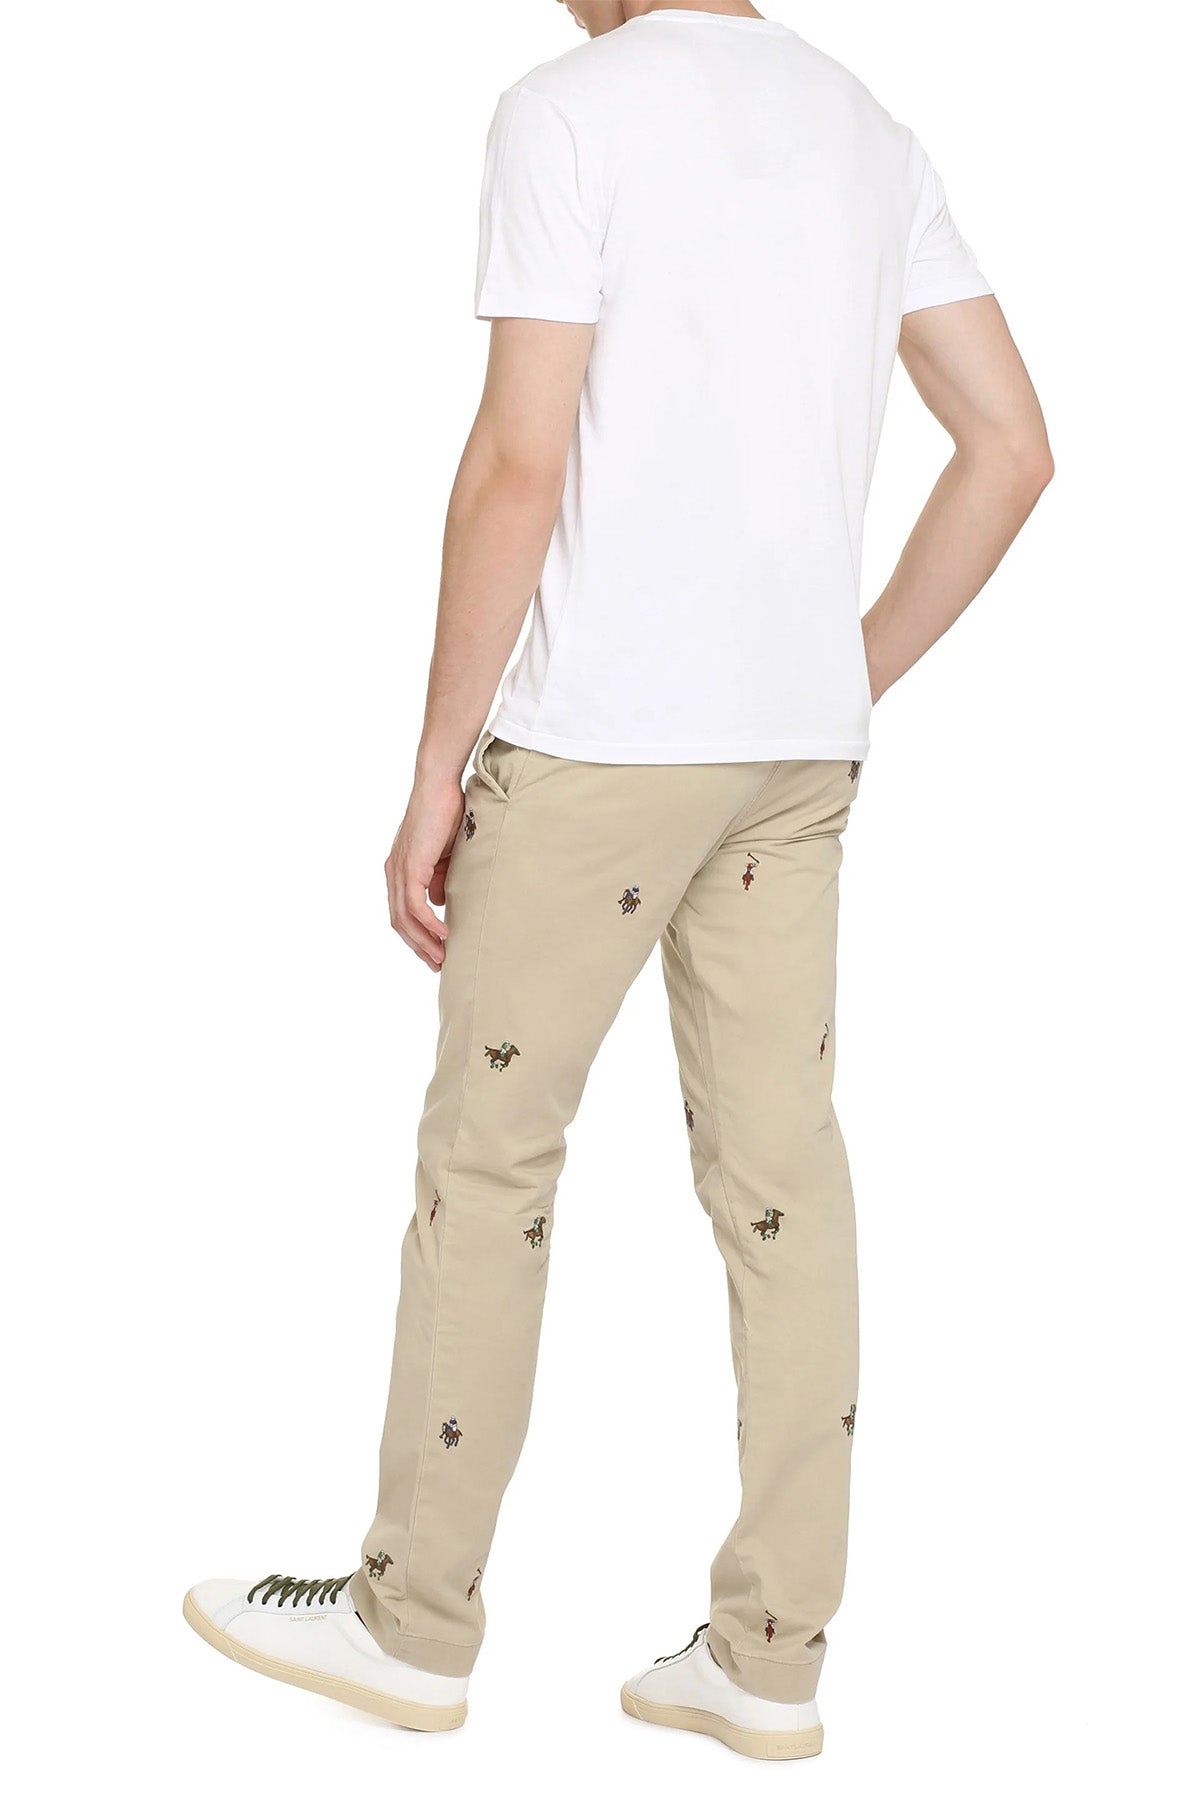 Polo Ralph Lauren Custom Slim Fit Polo Bear T-shirt-Libas Trendy Fashion Store